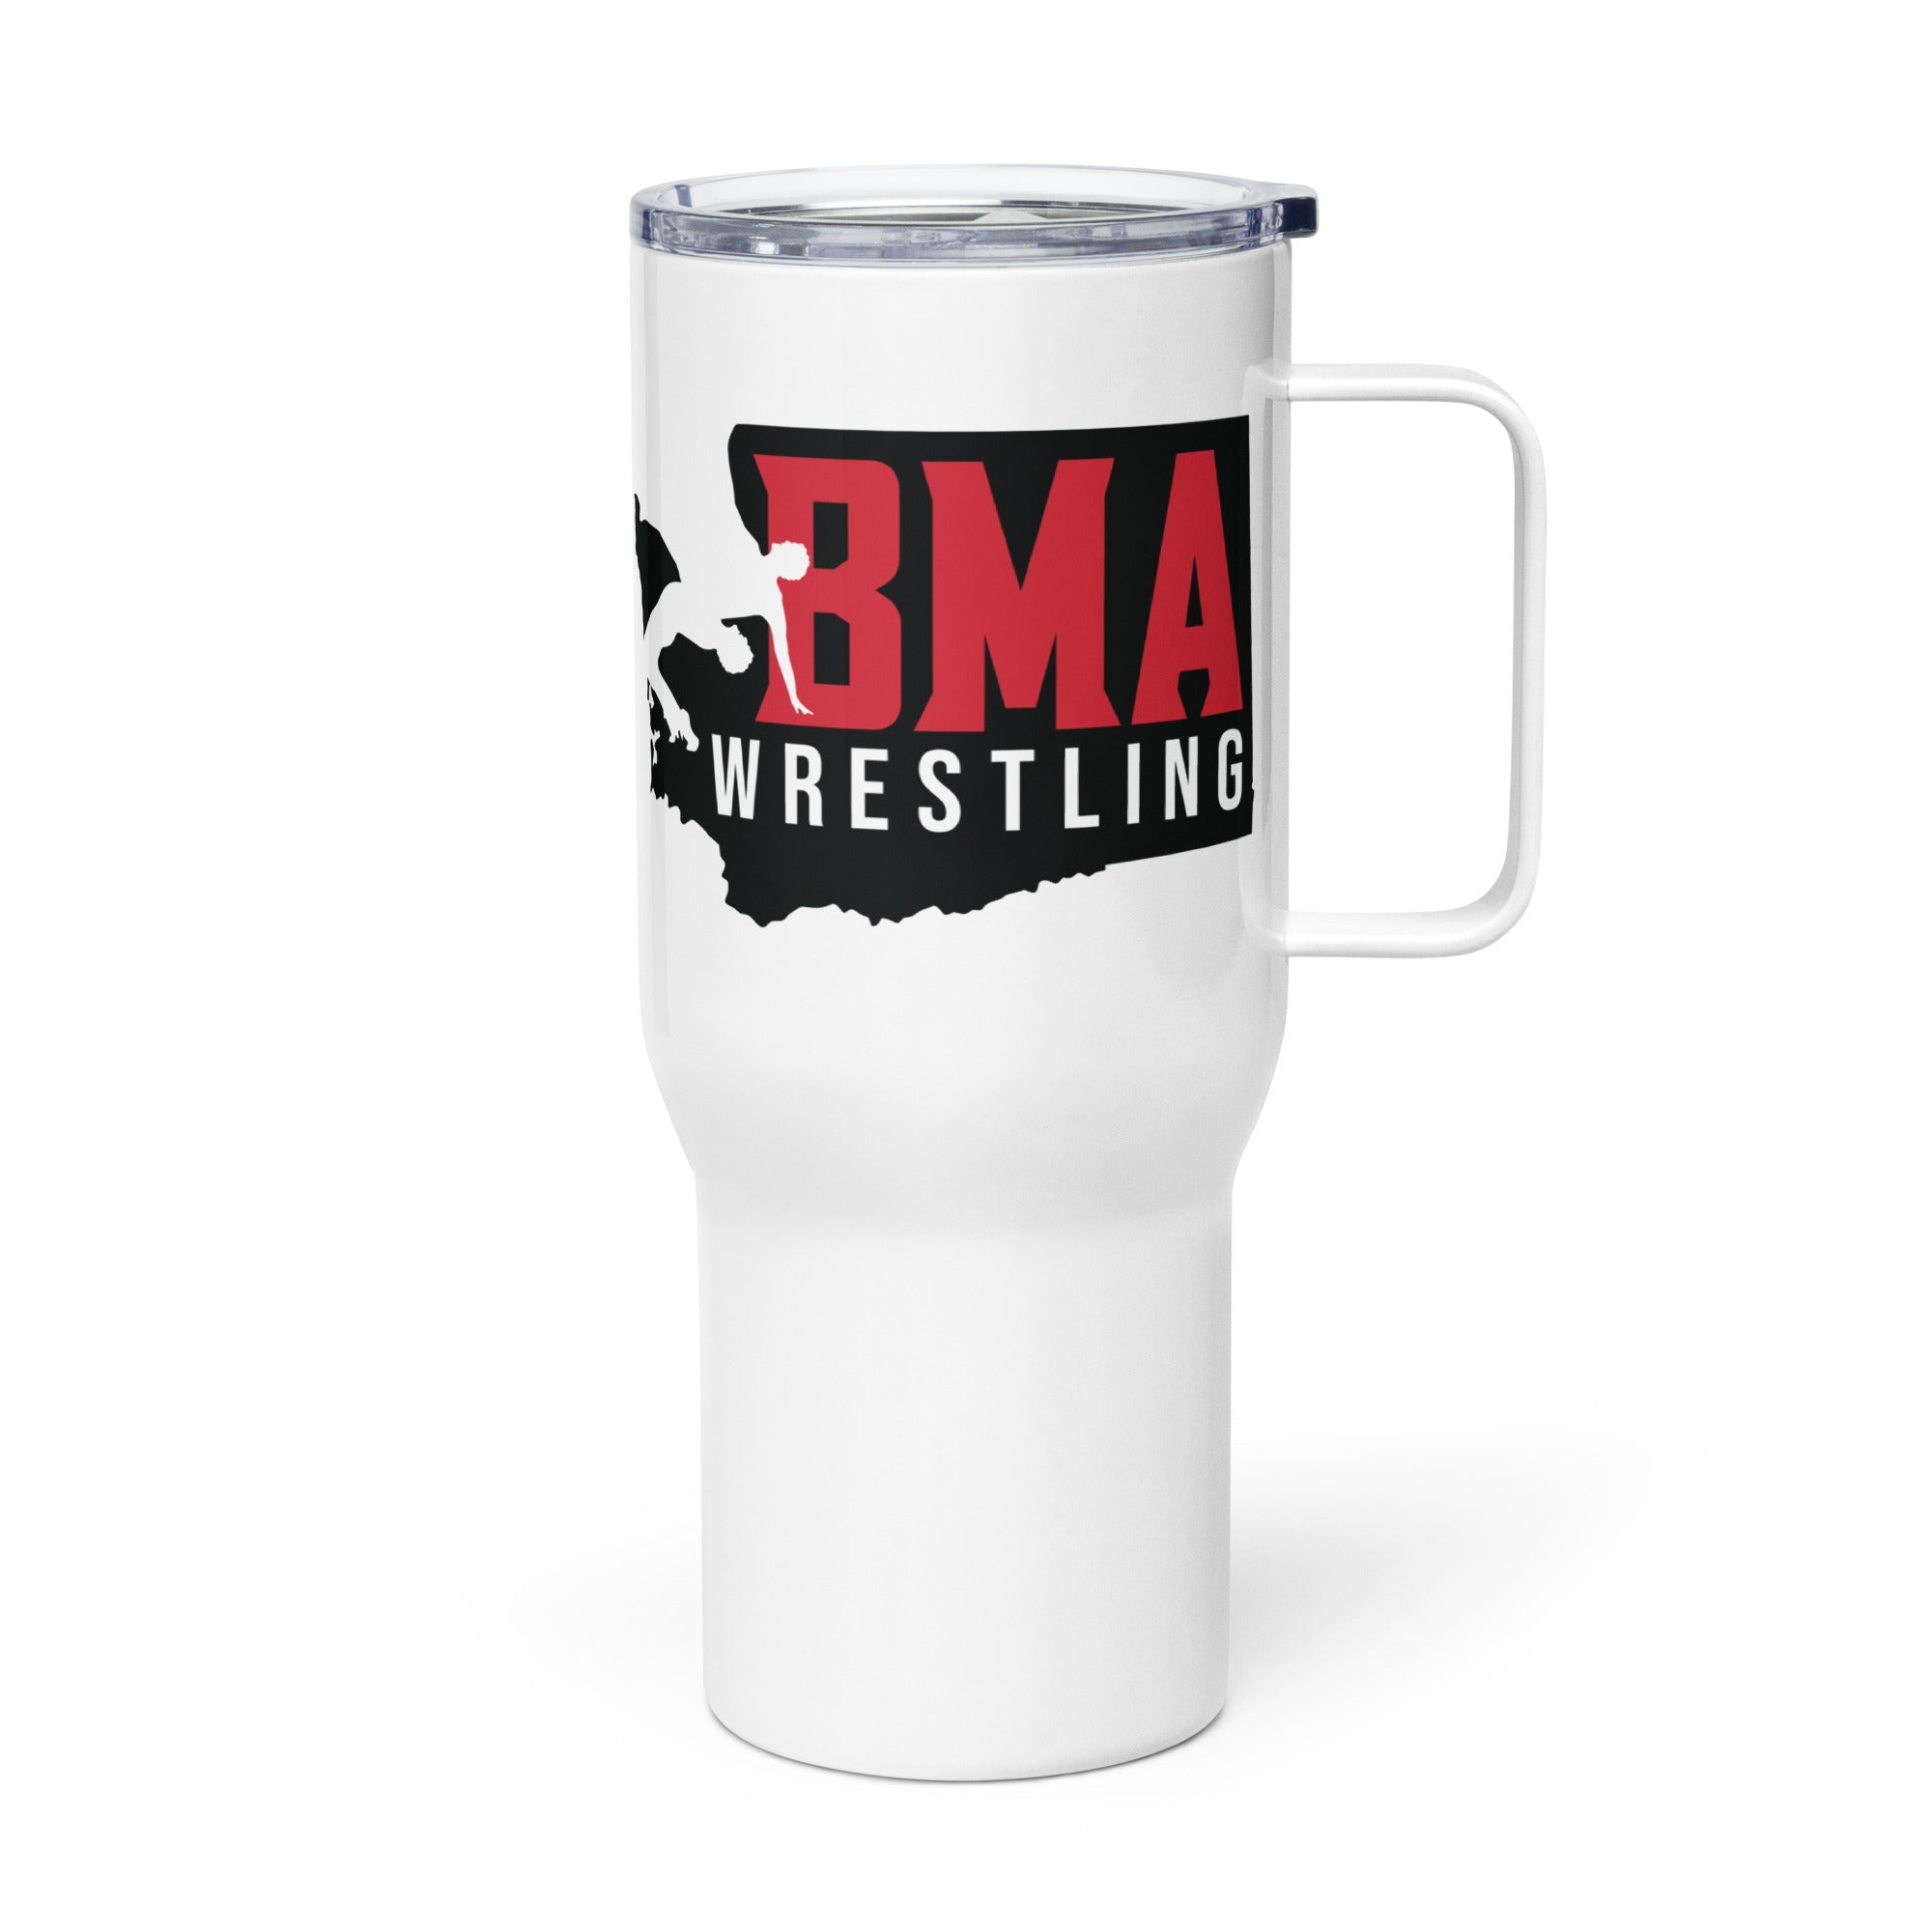 BMA Wrestling Academy Travel mug with a handle